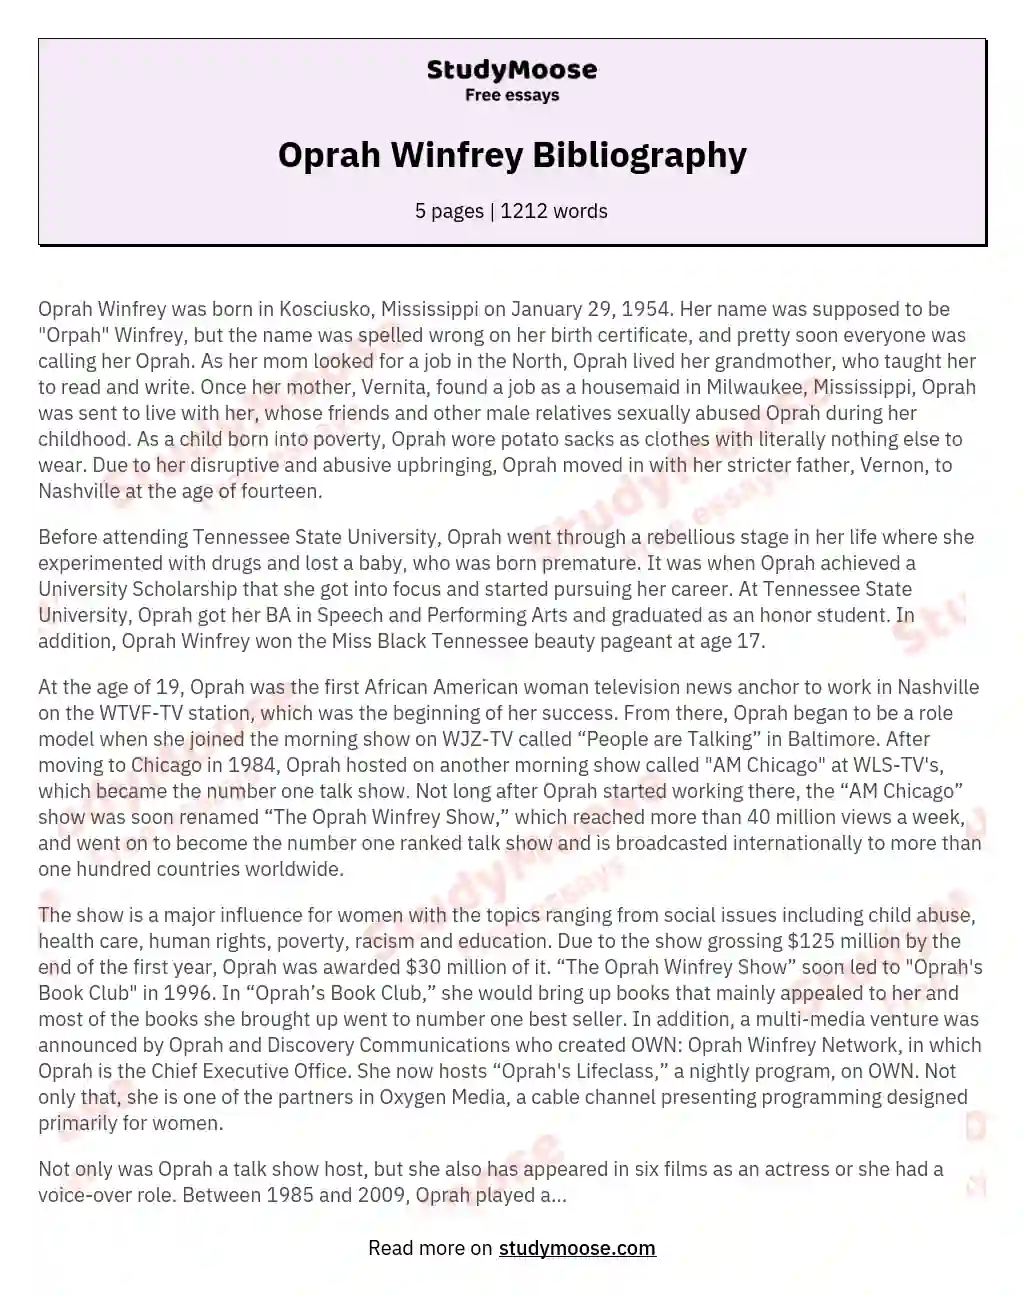 Oprah Winfrey Bibliography